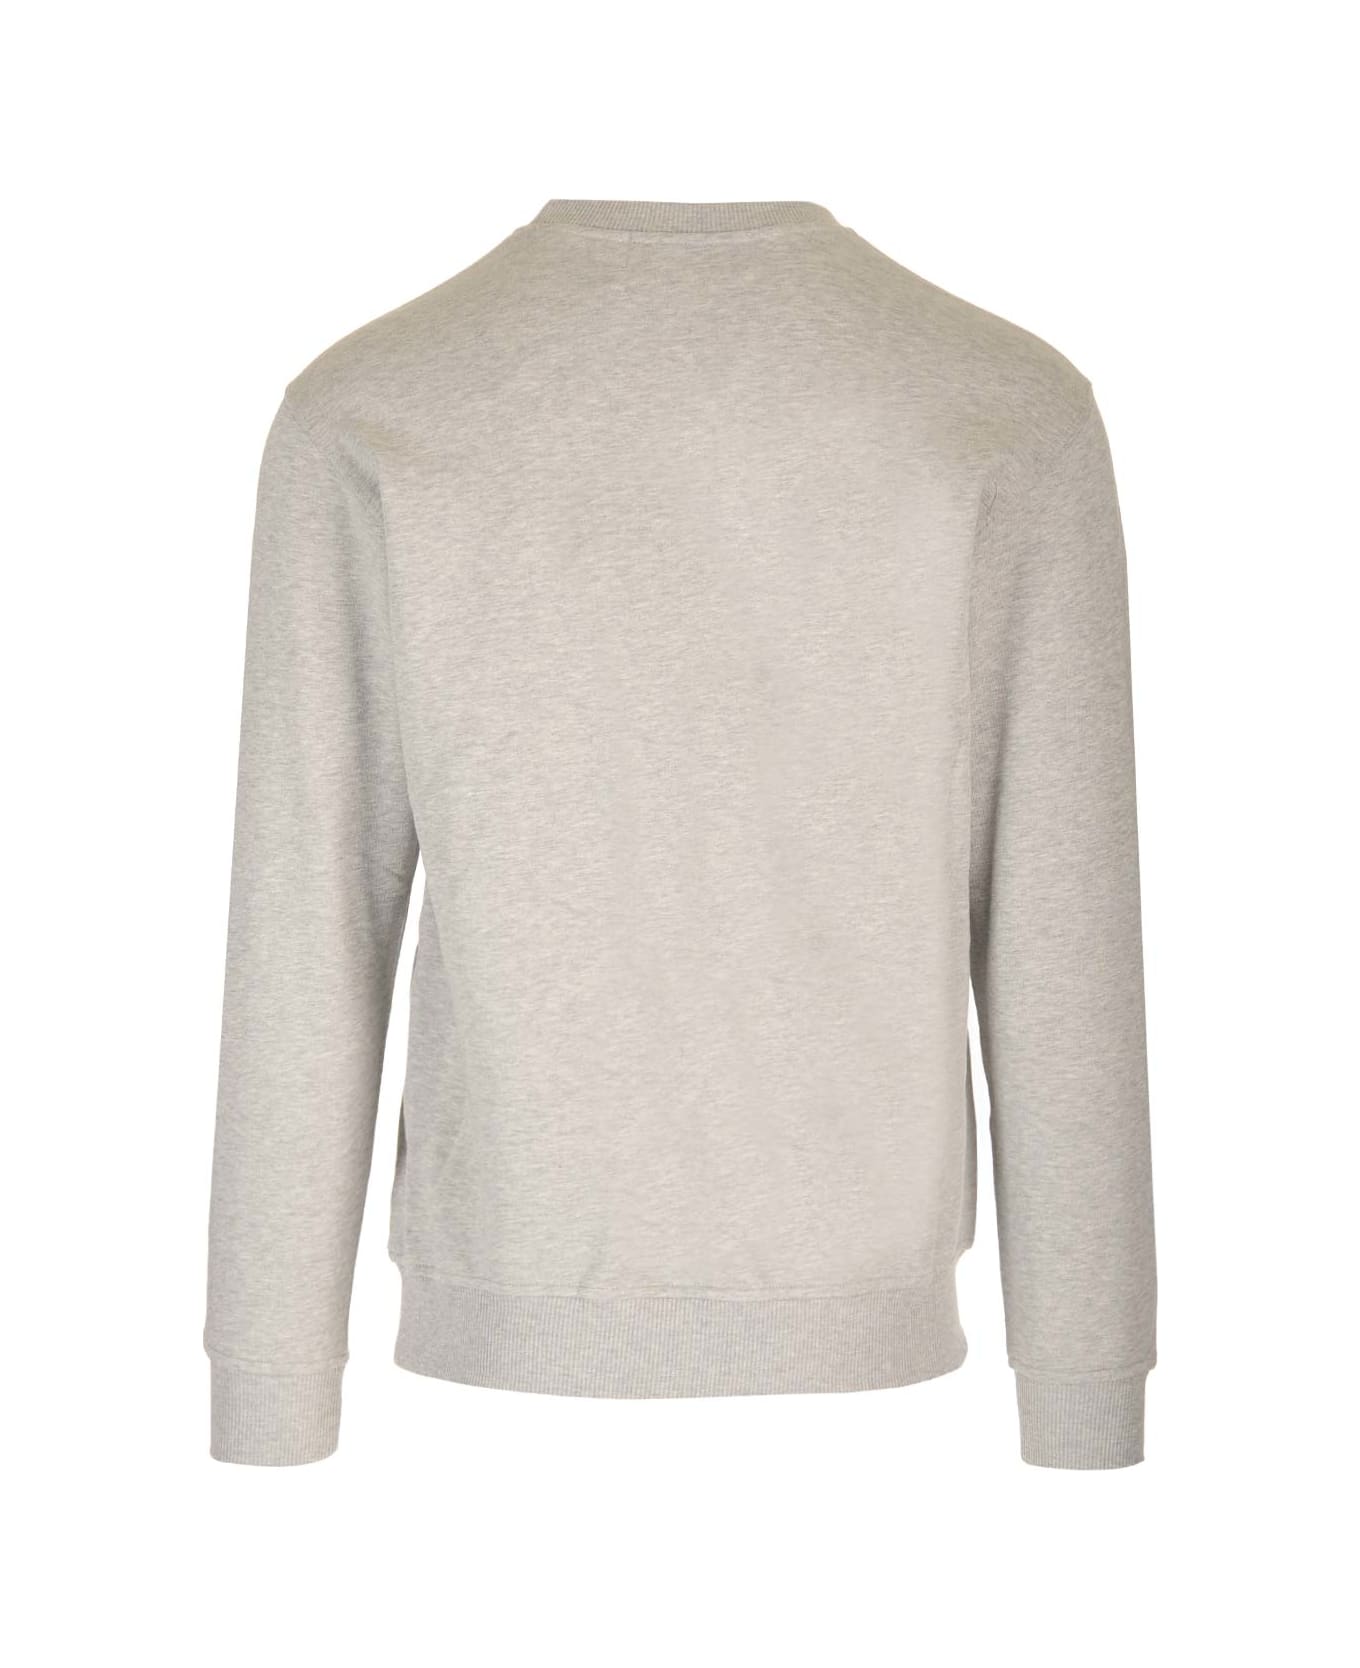 Comme des Garçons Shirt Grey Lacoste Sweatshirt - Top Grey